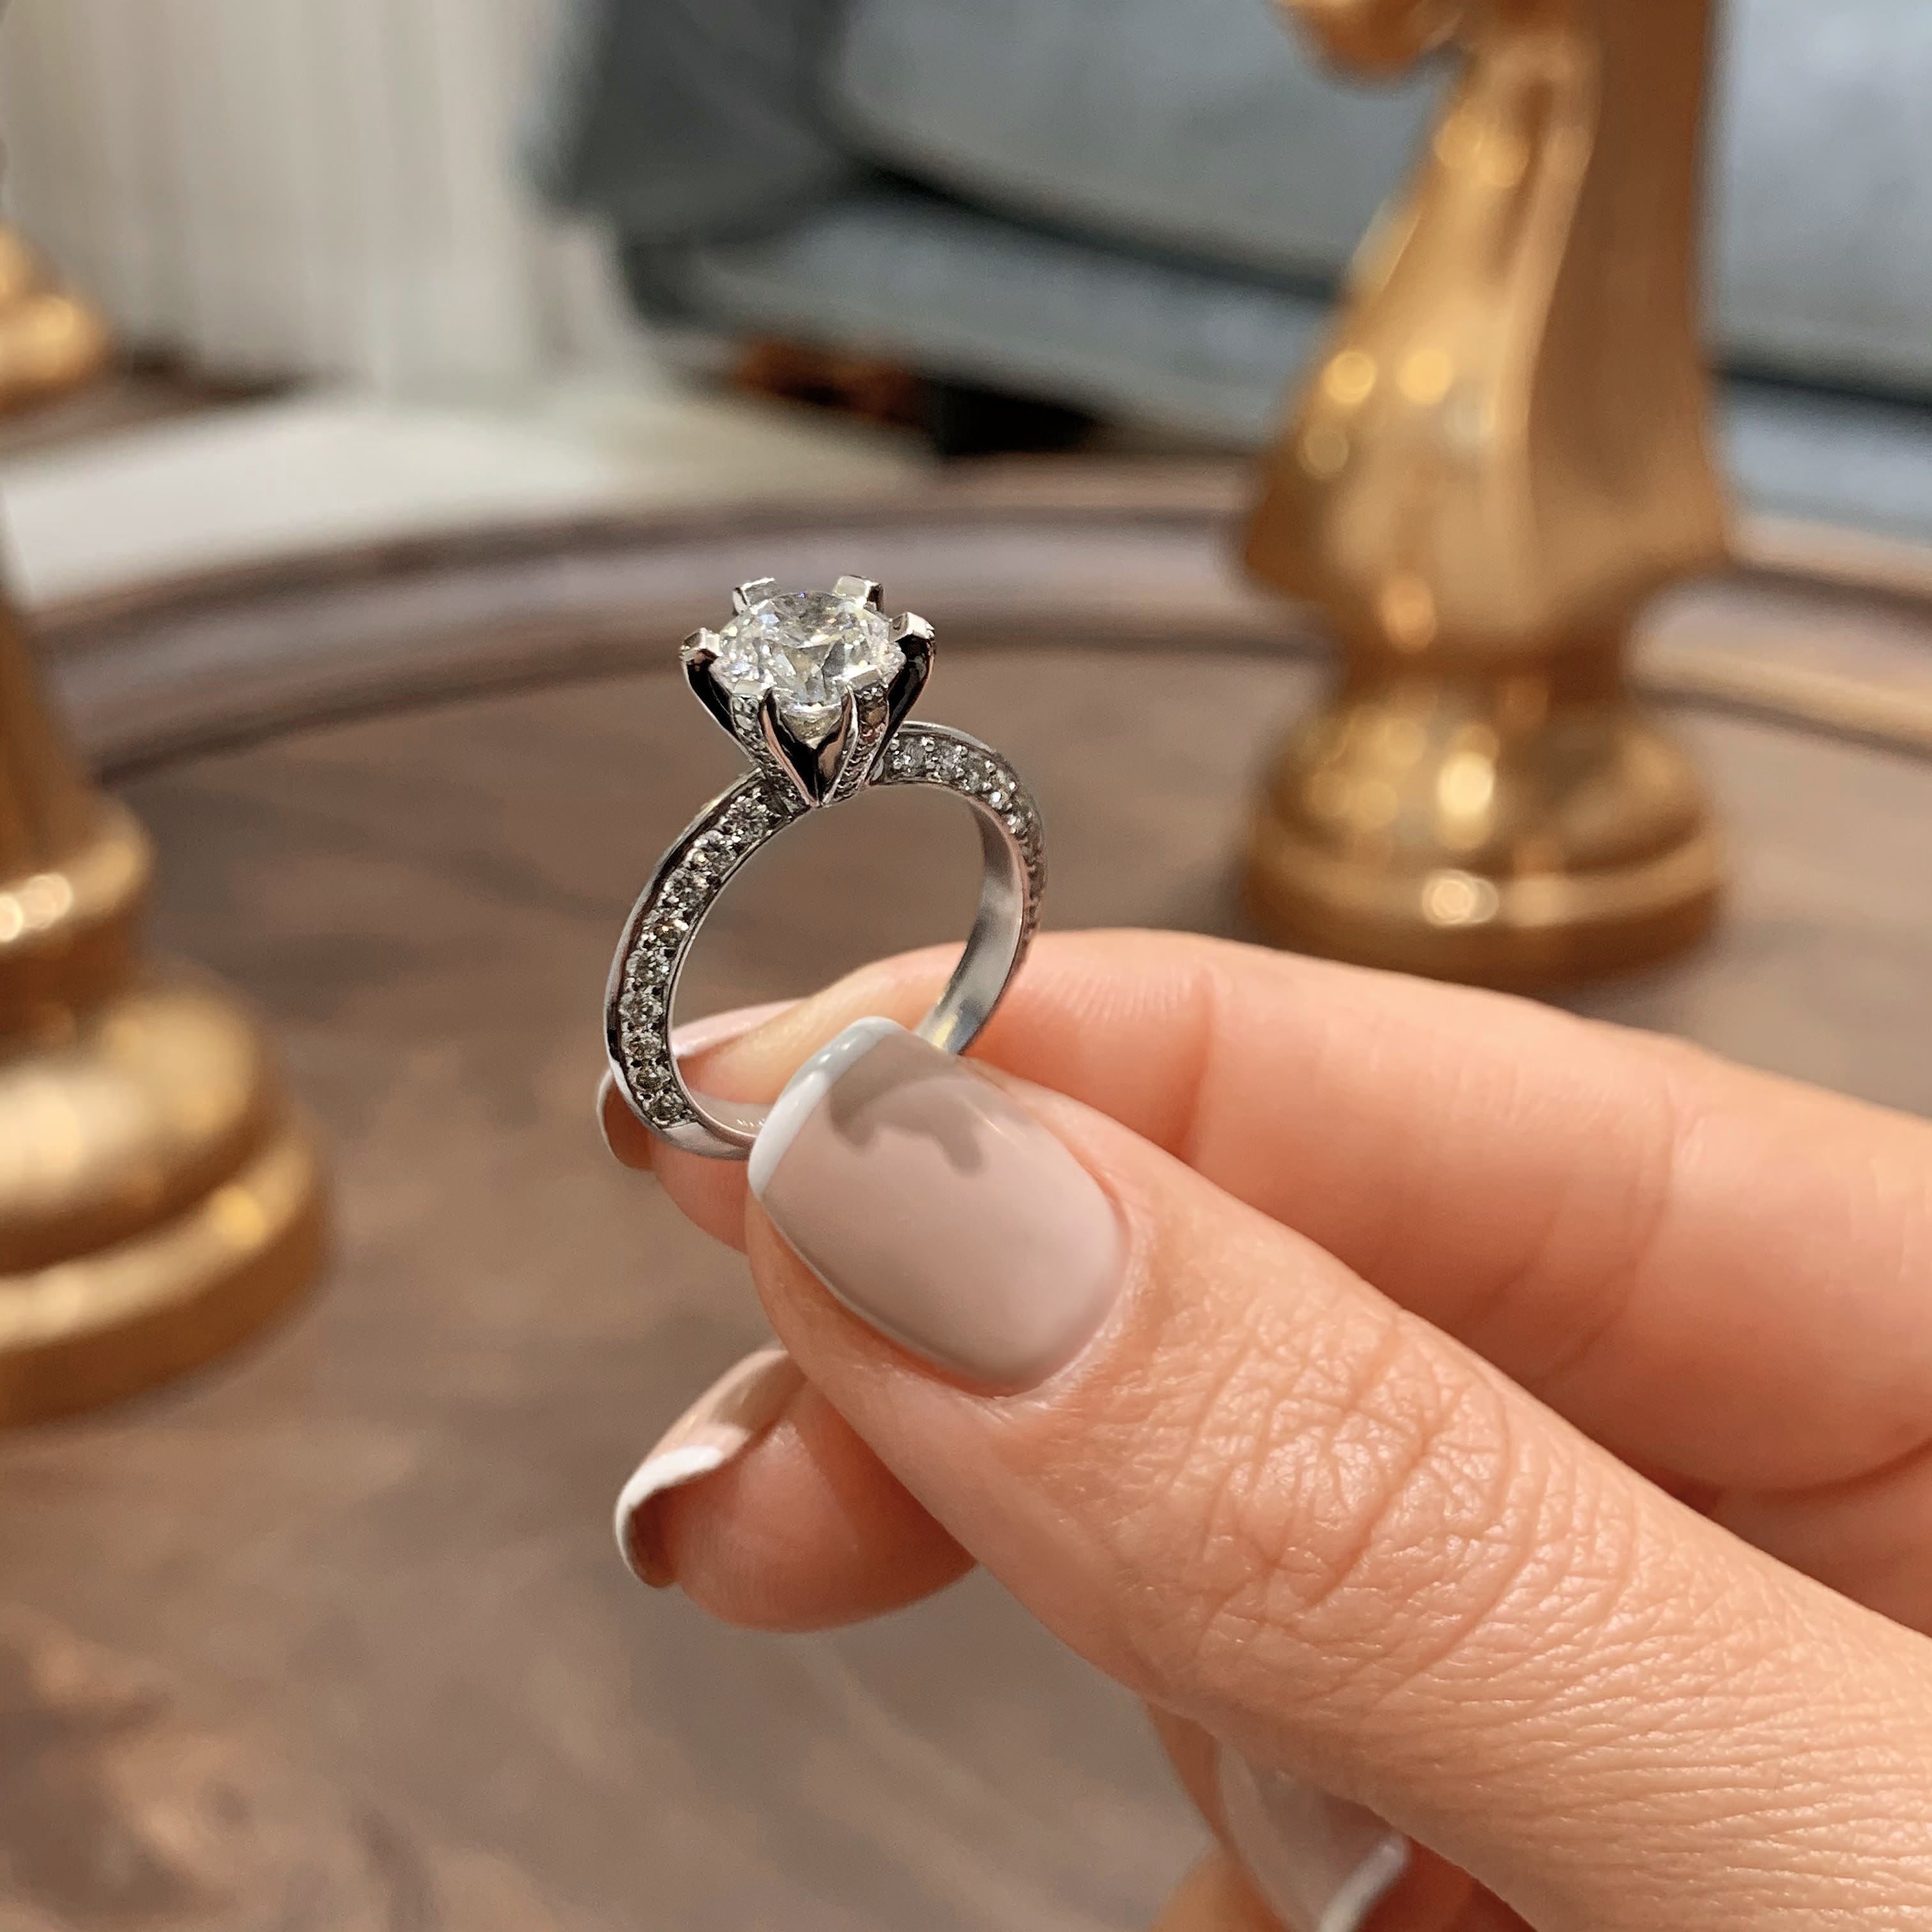 Eliana Diamond Engagement Ring   (2.00 Carat) -18K White Gold